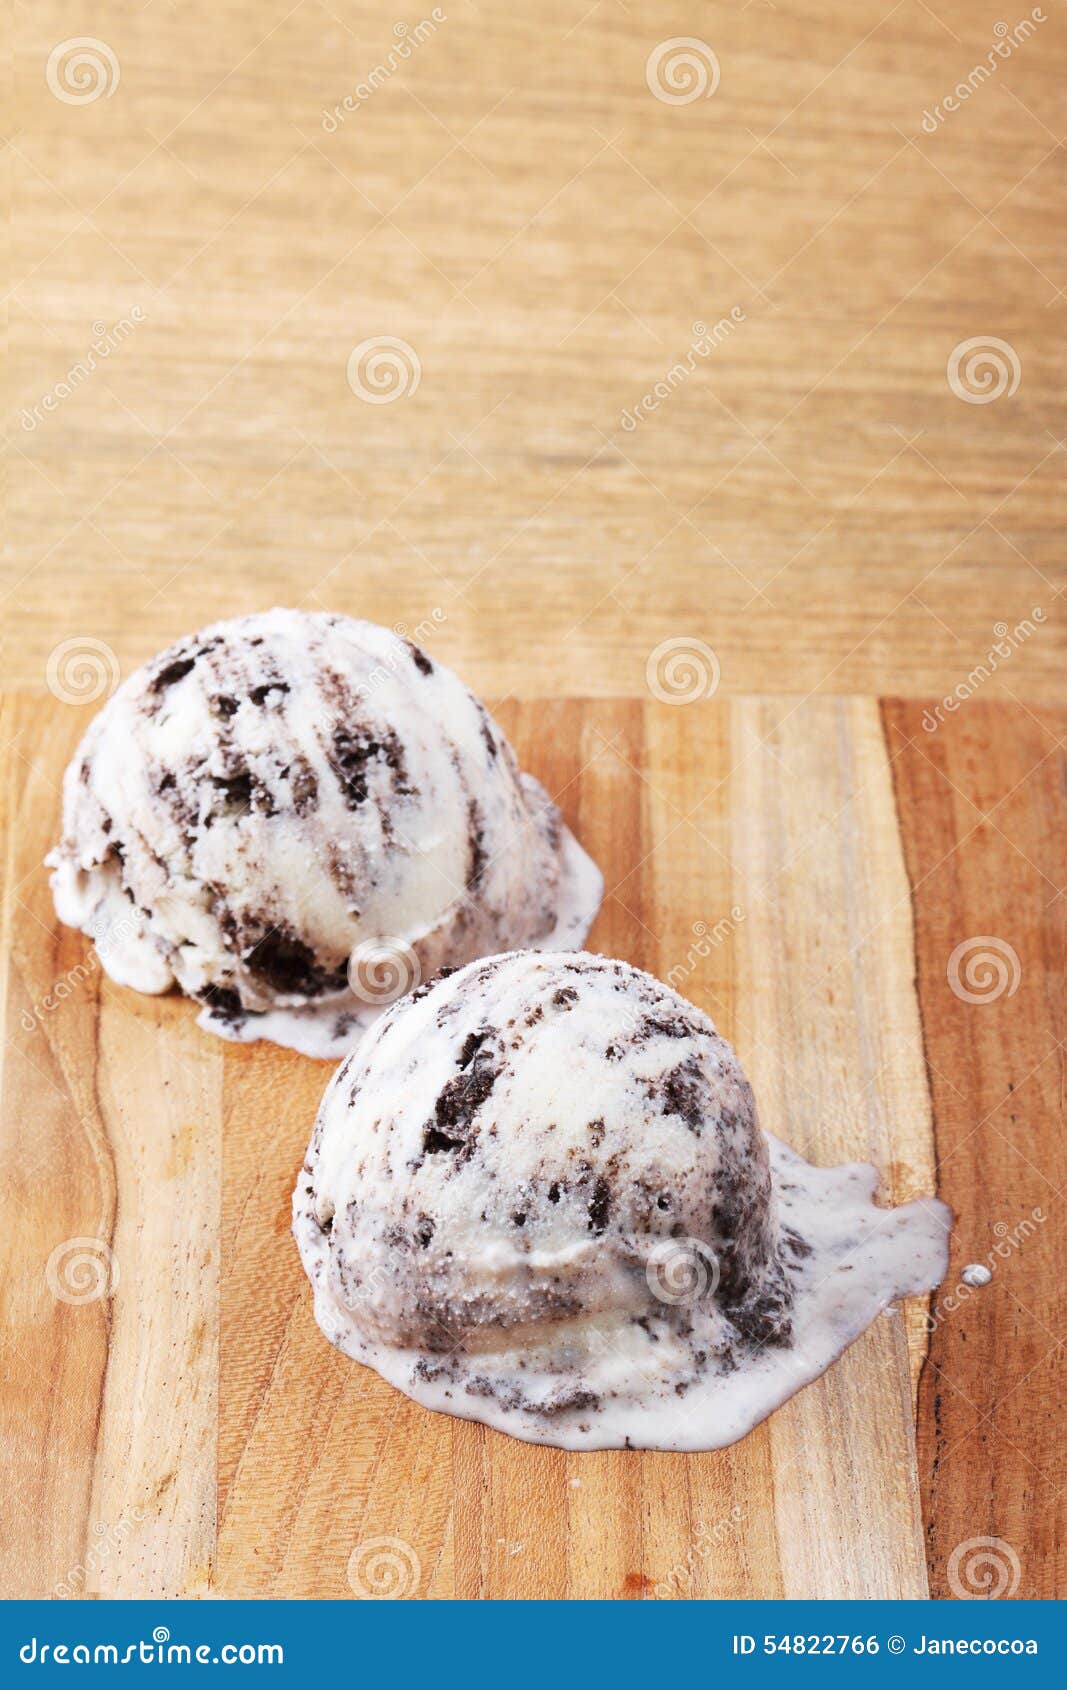 Homemade Cookie and Cream Ice Cream Scoop Stock Photo - Image of 